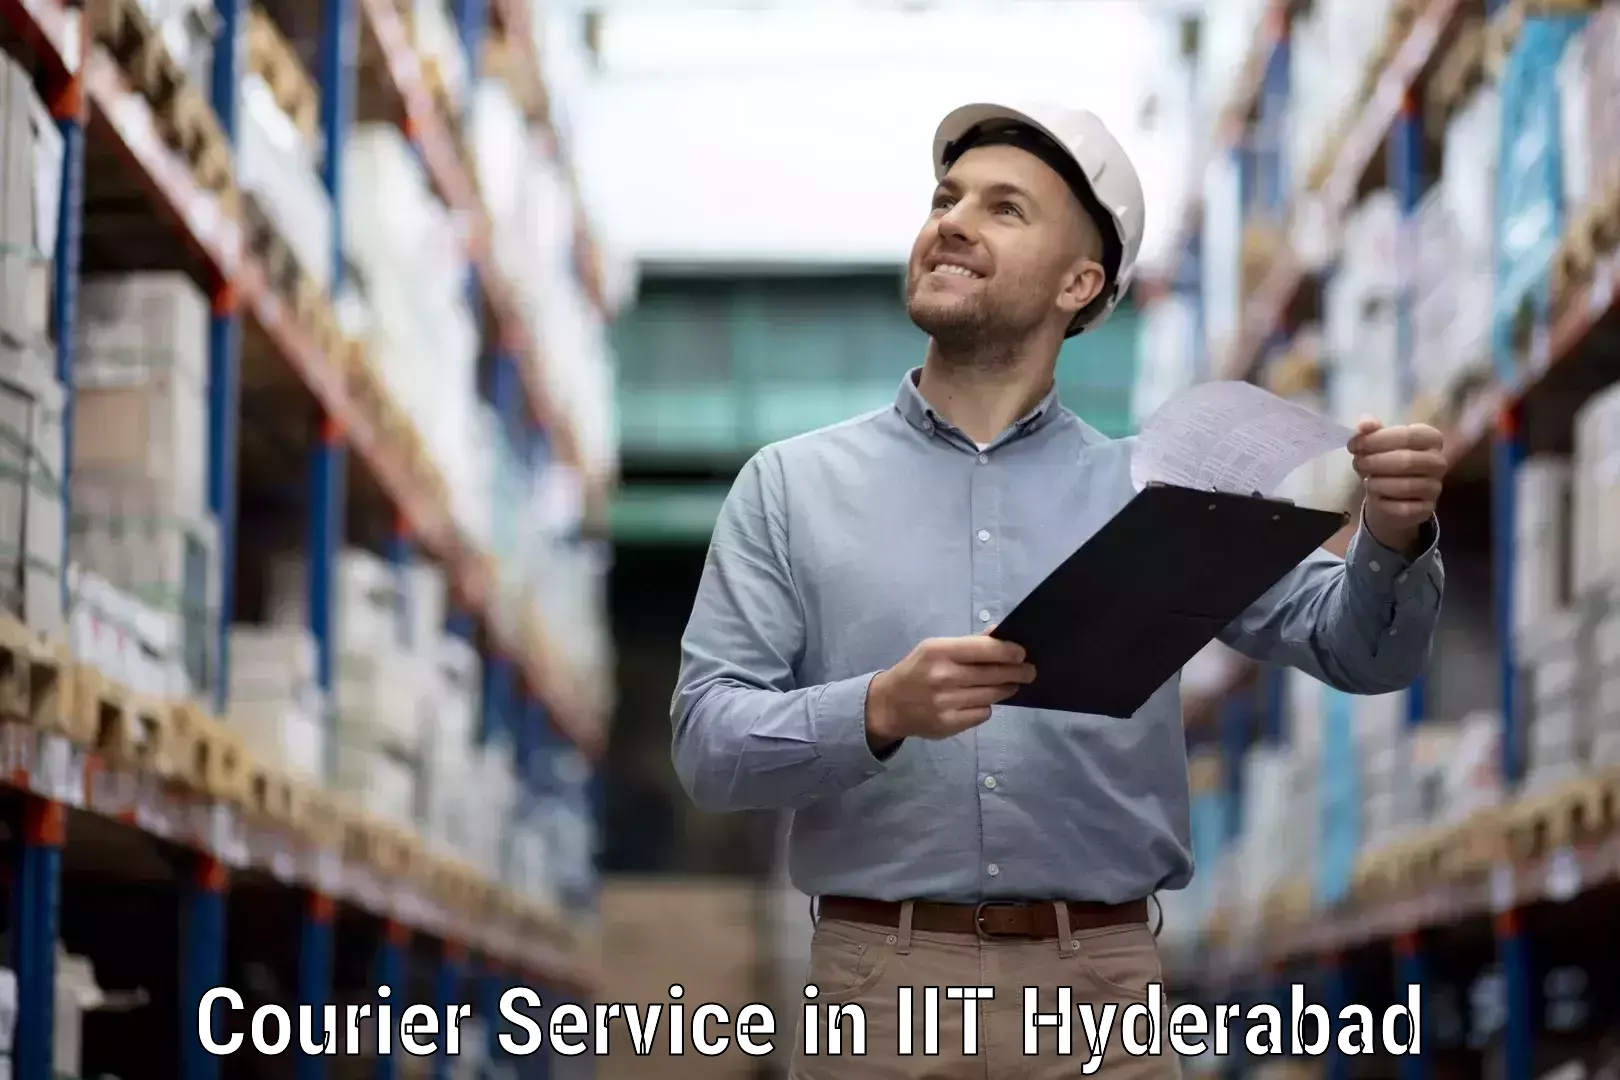 Online package tracking in IIT Hyderabad